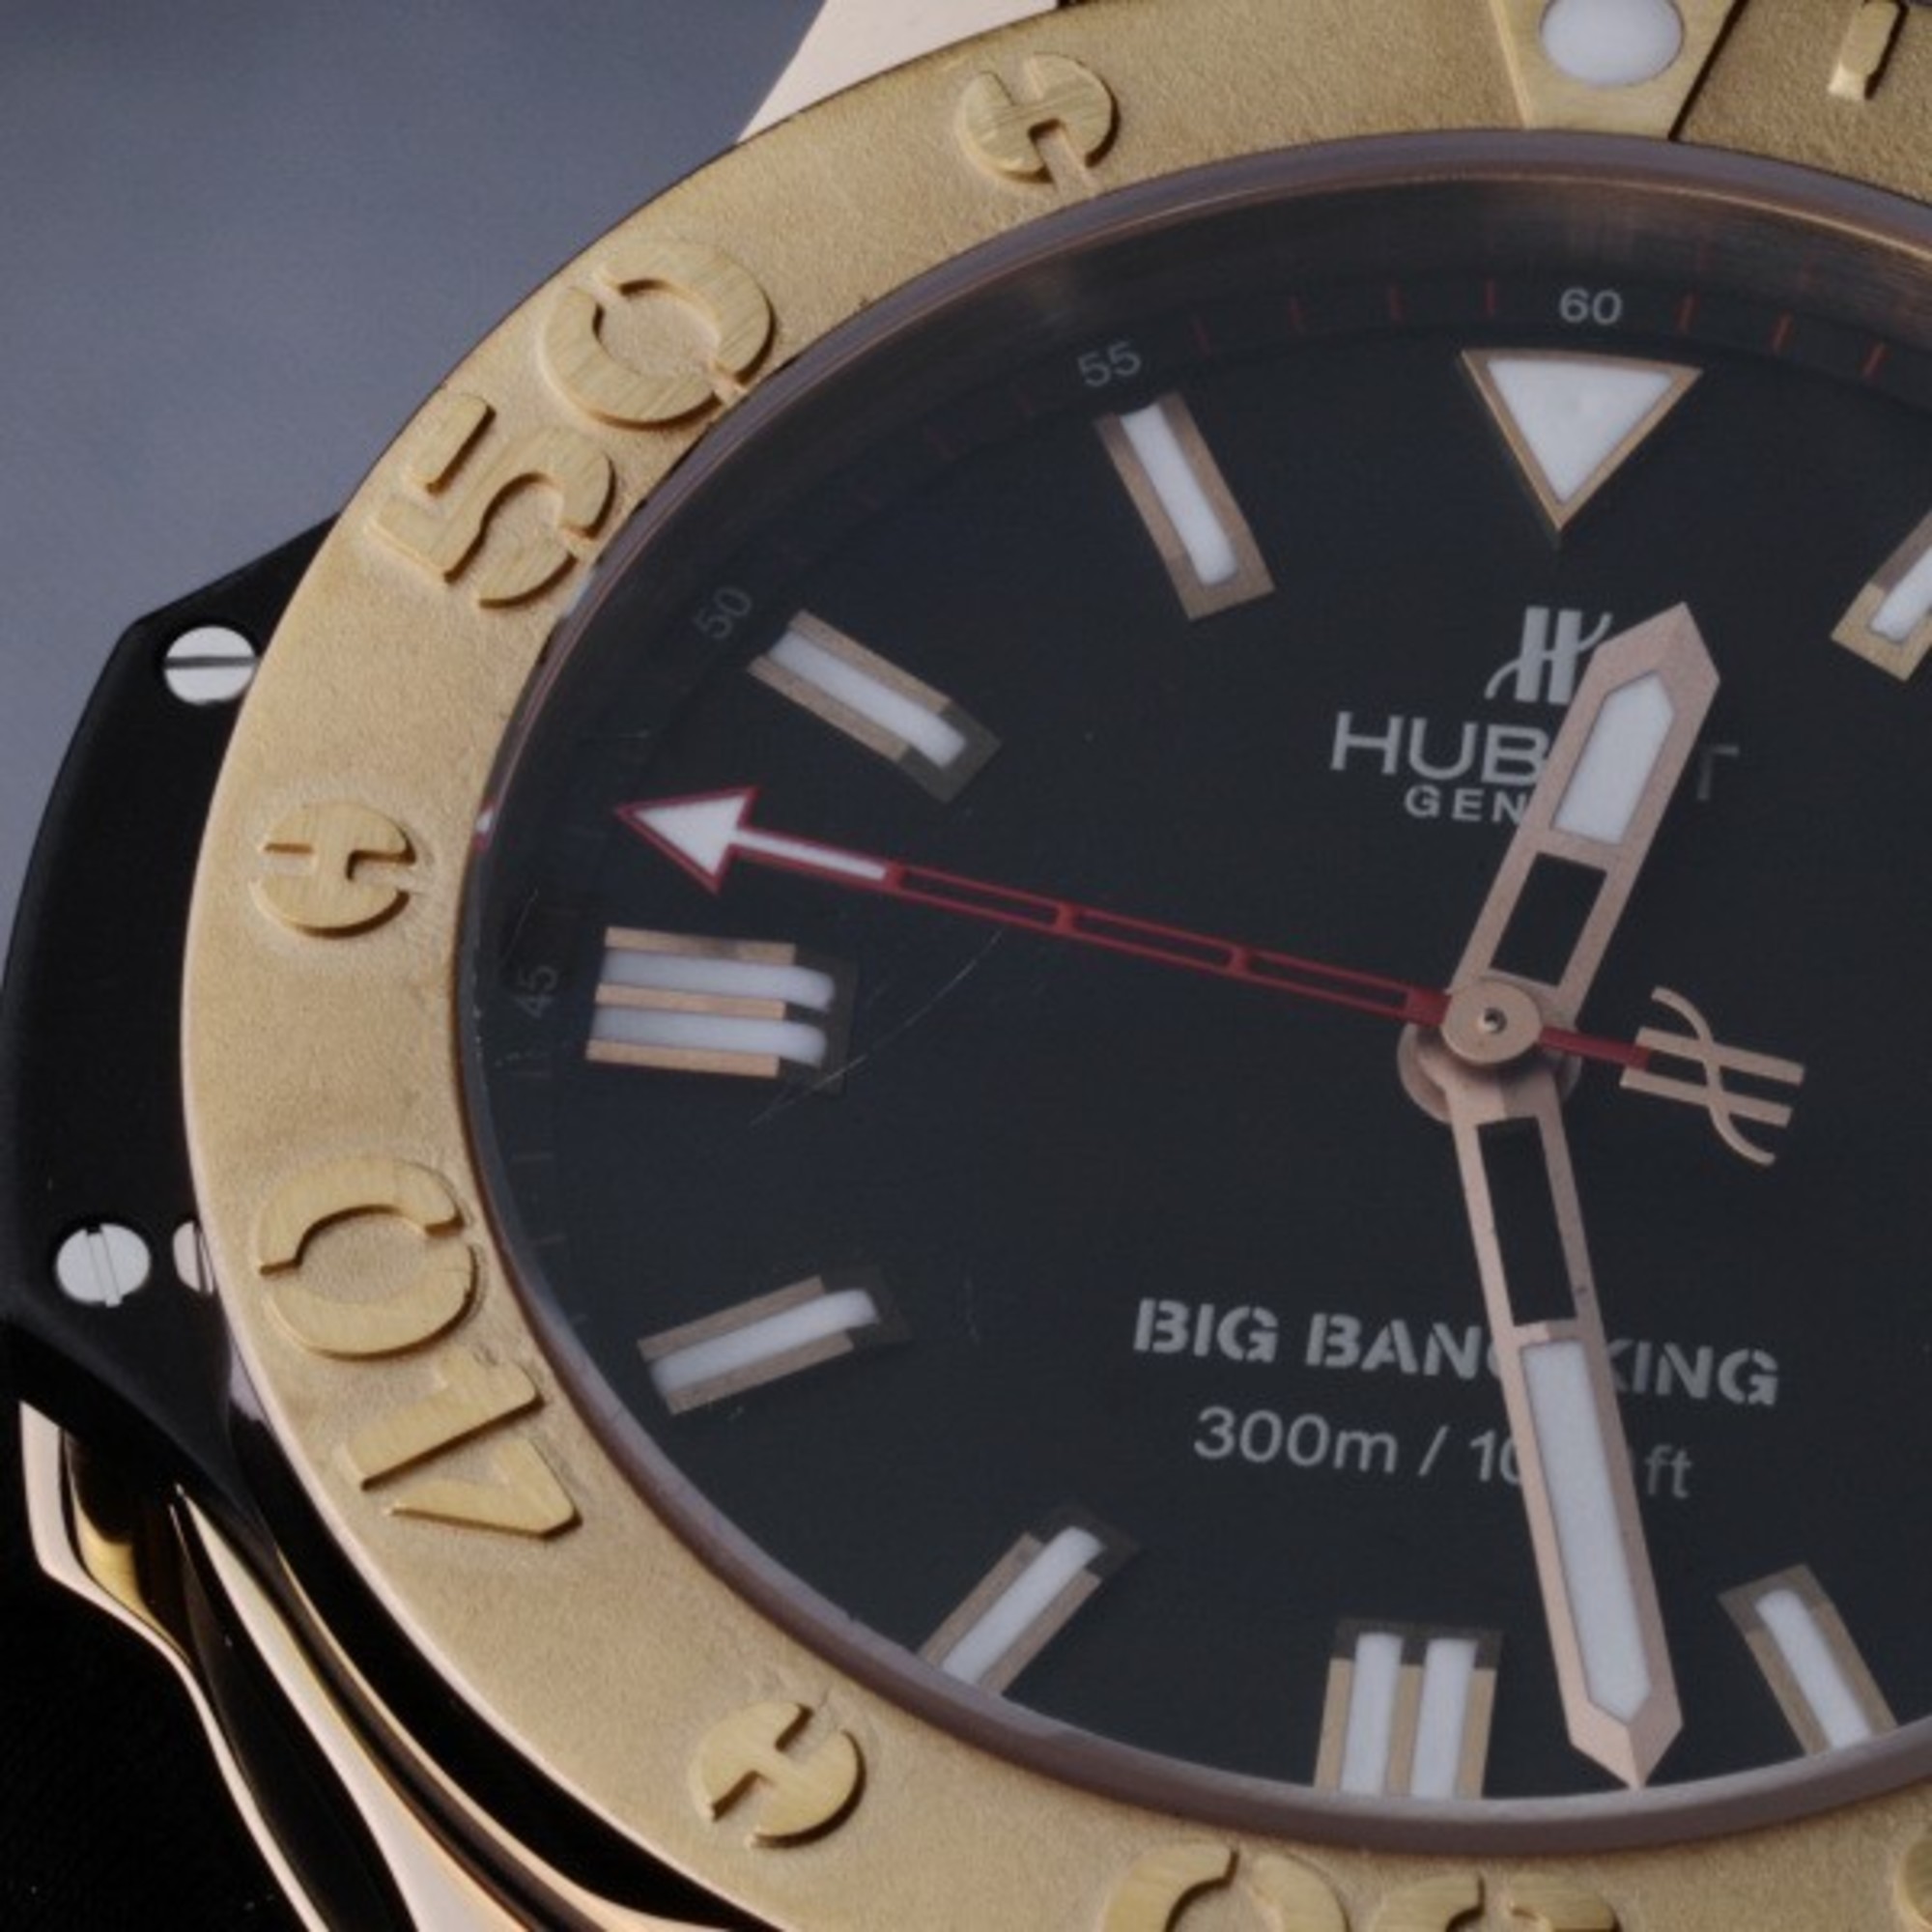 Hublot HUBLOT Big Bang King 322.PX.100.RX black dial watch men's